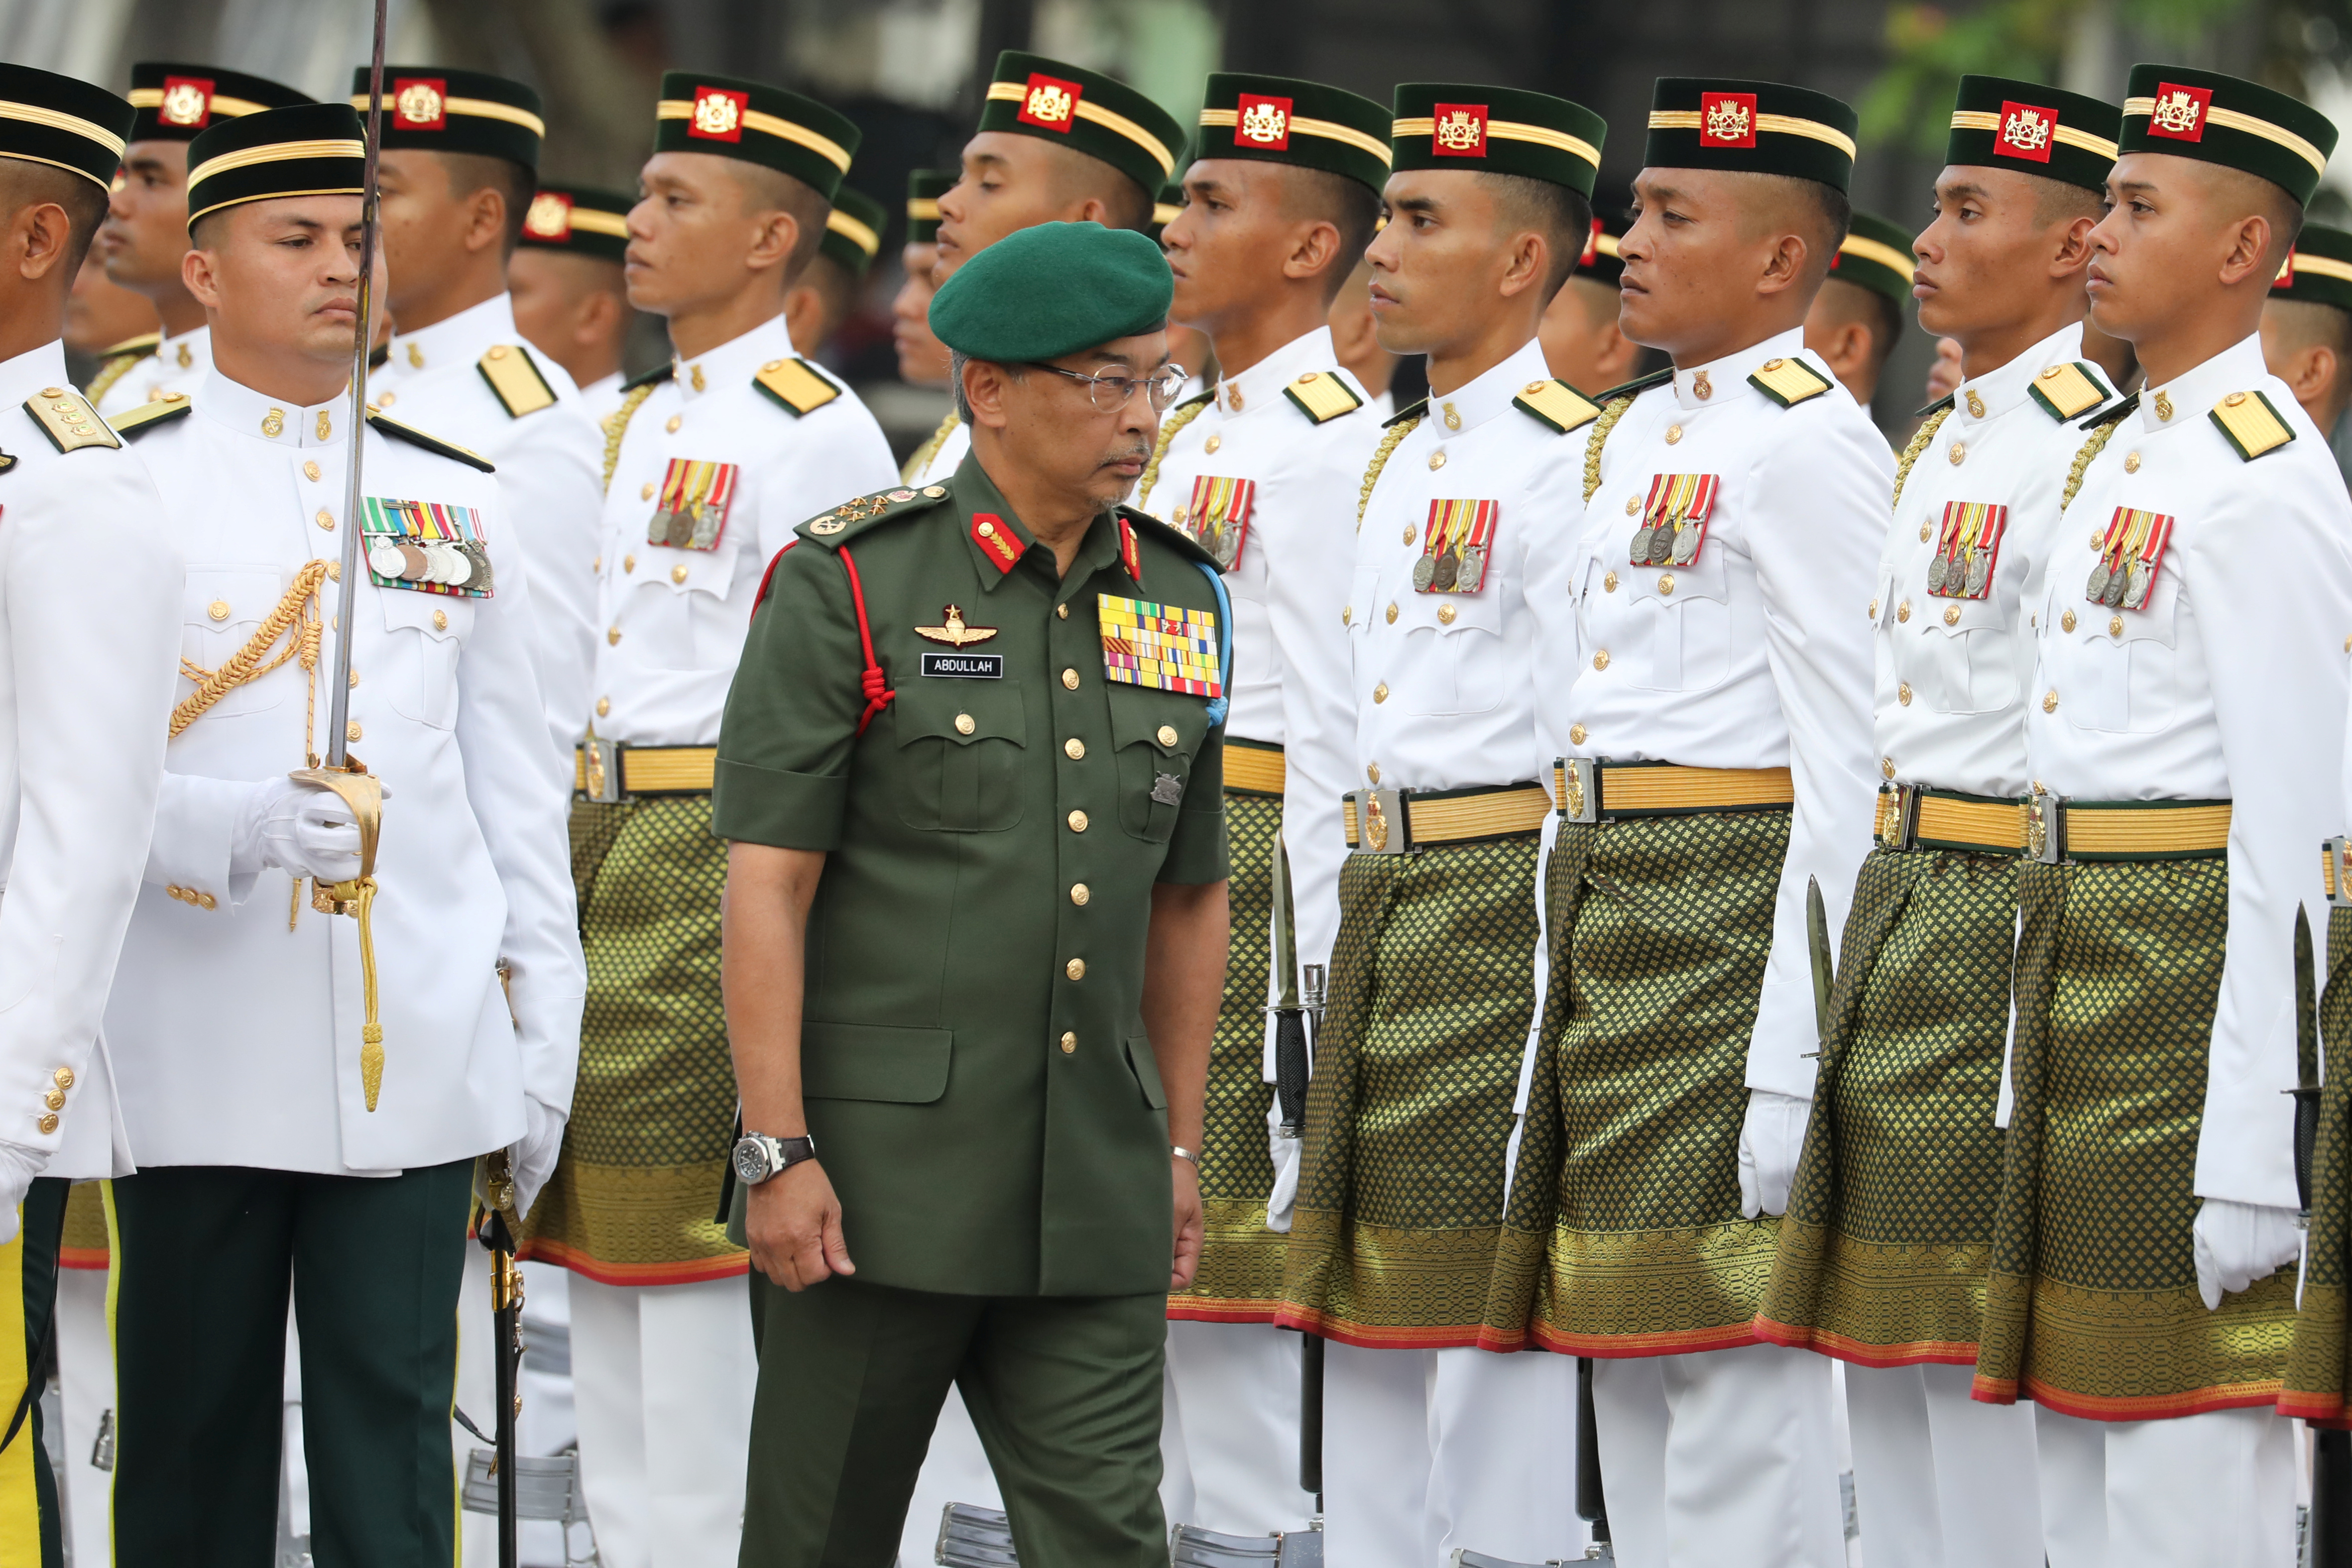 Malaysia's King, Al-Sultan Abdullah Ri'ayatuddin Al-Mustafa Billah Shah, inspects an honour guard during the 62nd Merdeka Day (Independence Day) celebrations in Putrajaya.